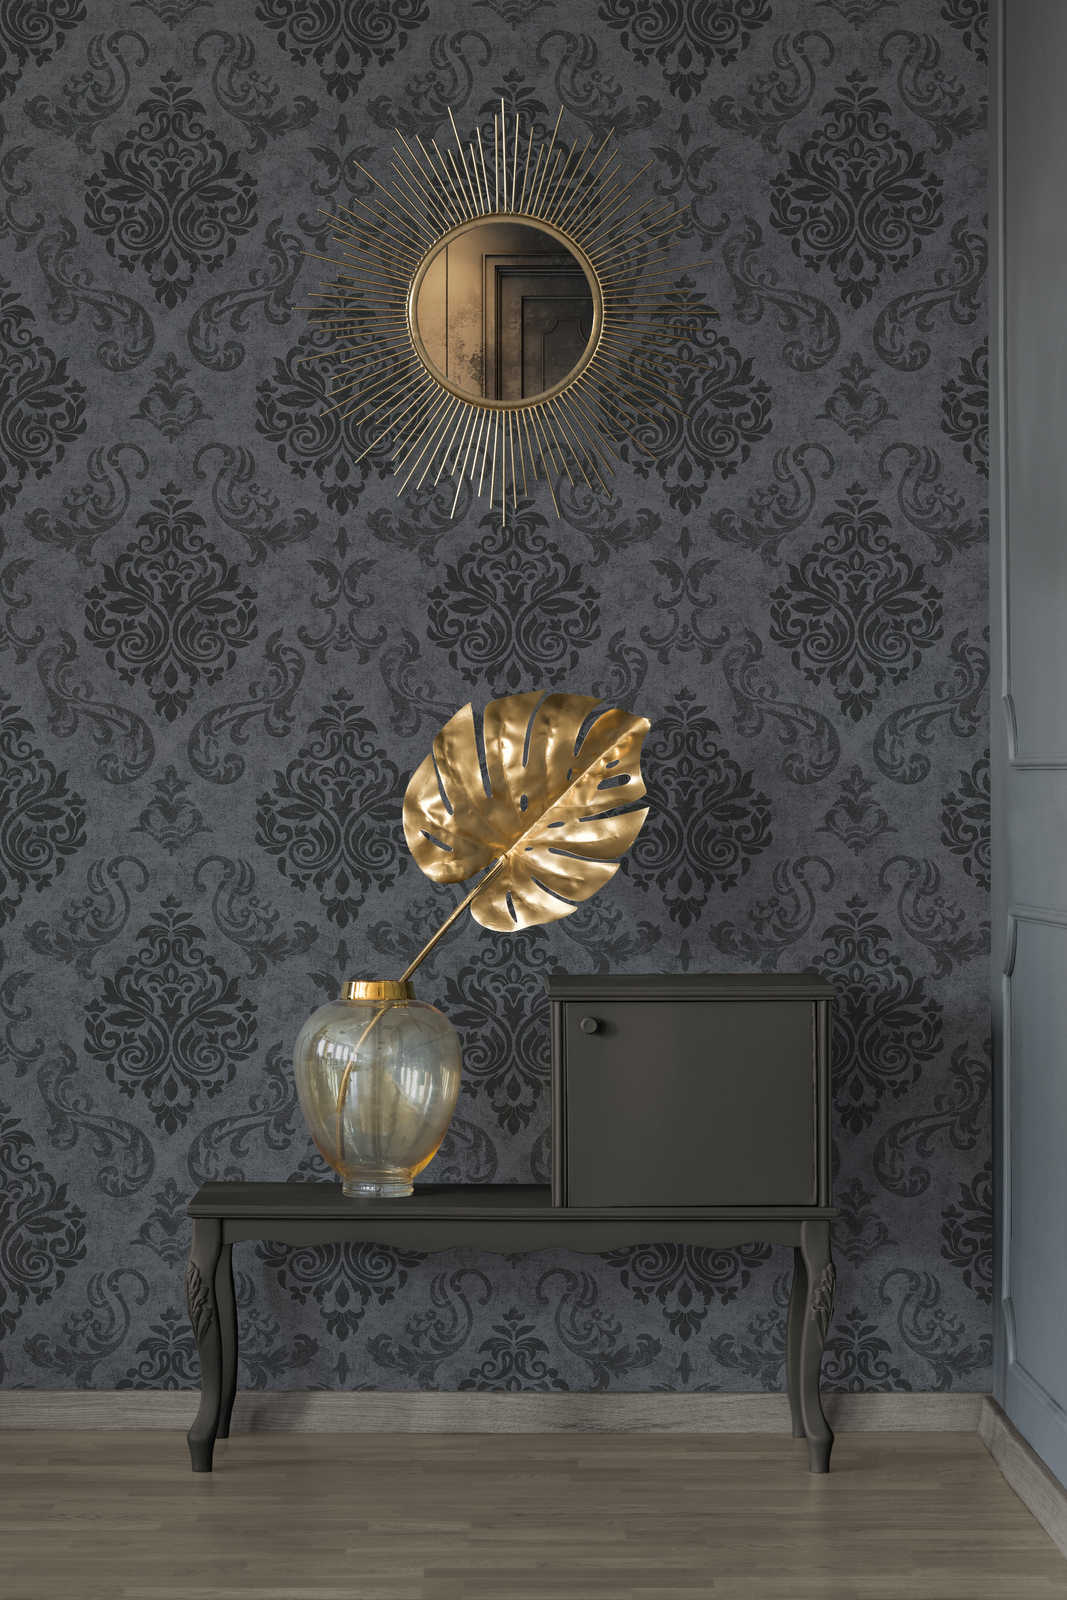             Ornamenten behang barok met glittereffect - grijs, metallic, zwart
        